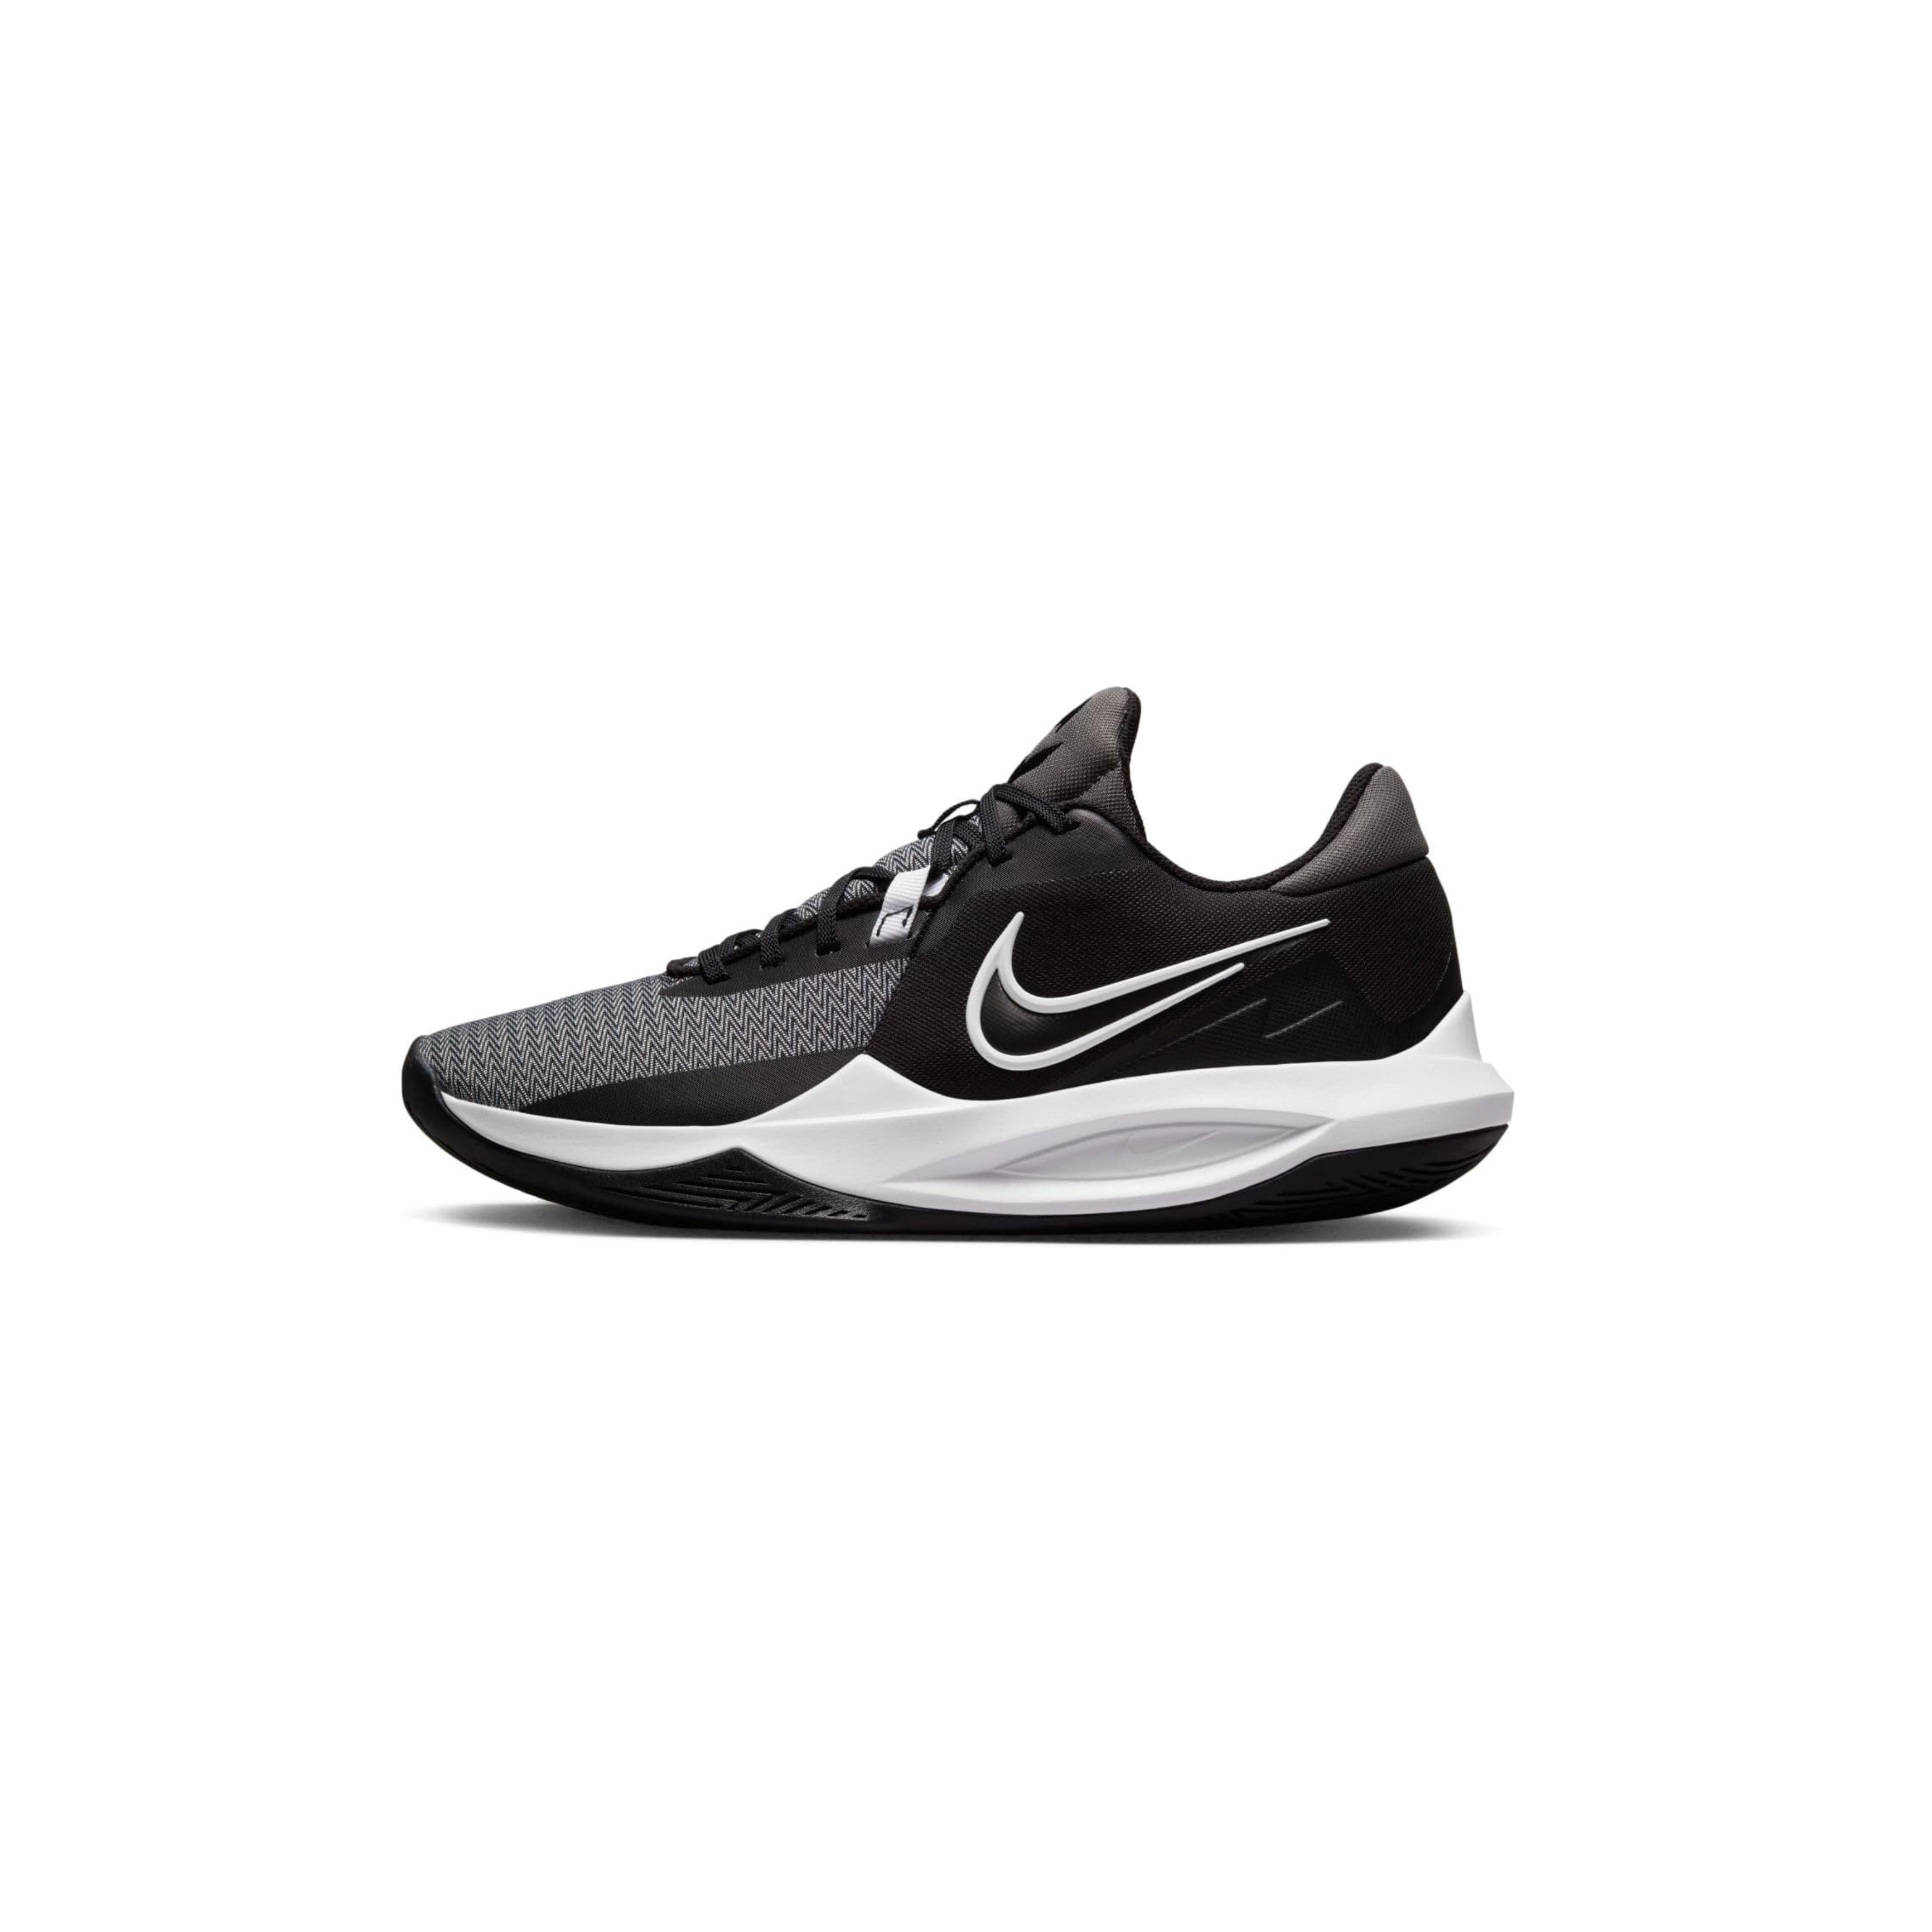 Nike precision 6 black and white